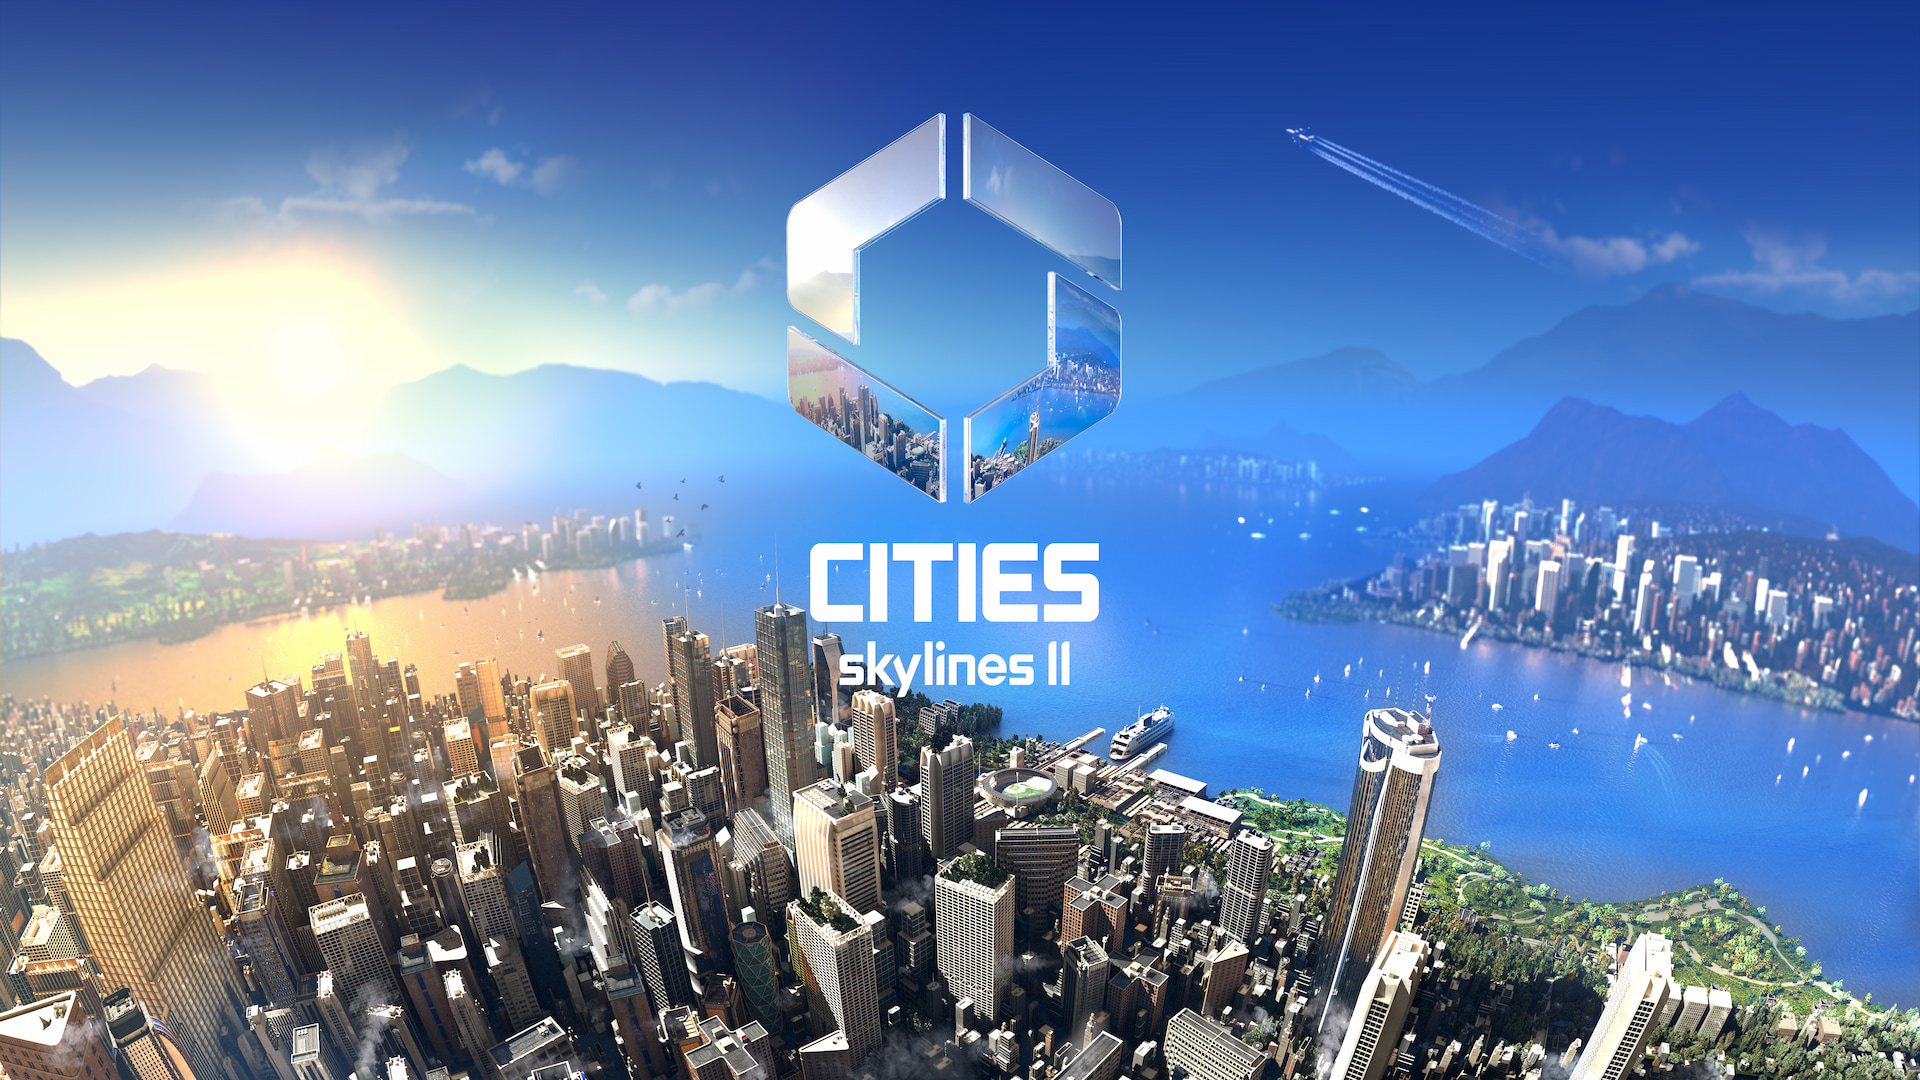 Cities Skylines II : remboursements, report des versions Xbox/PS5... le studio s'explique